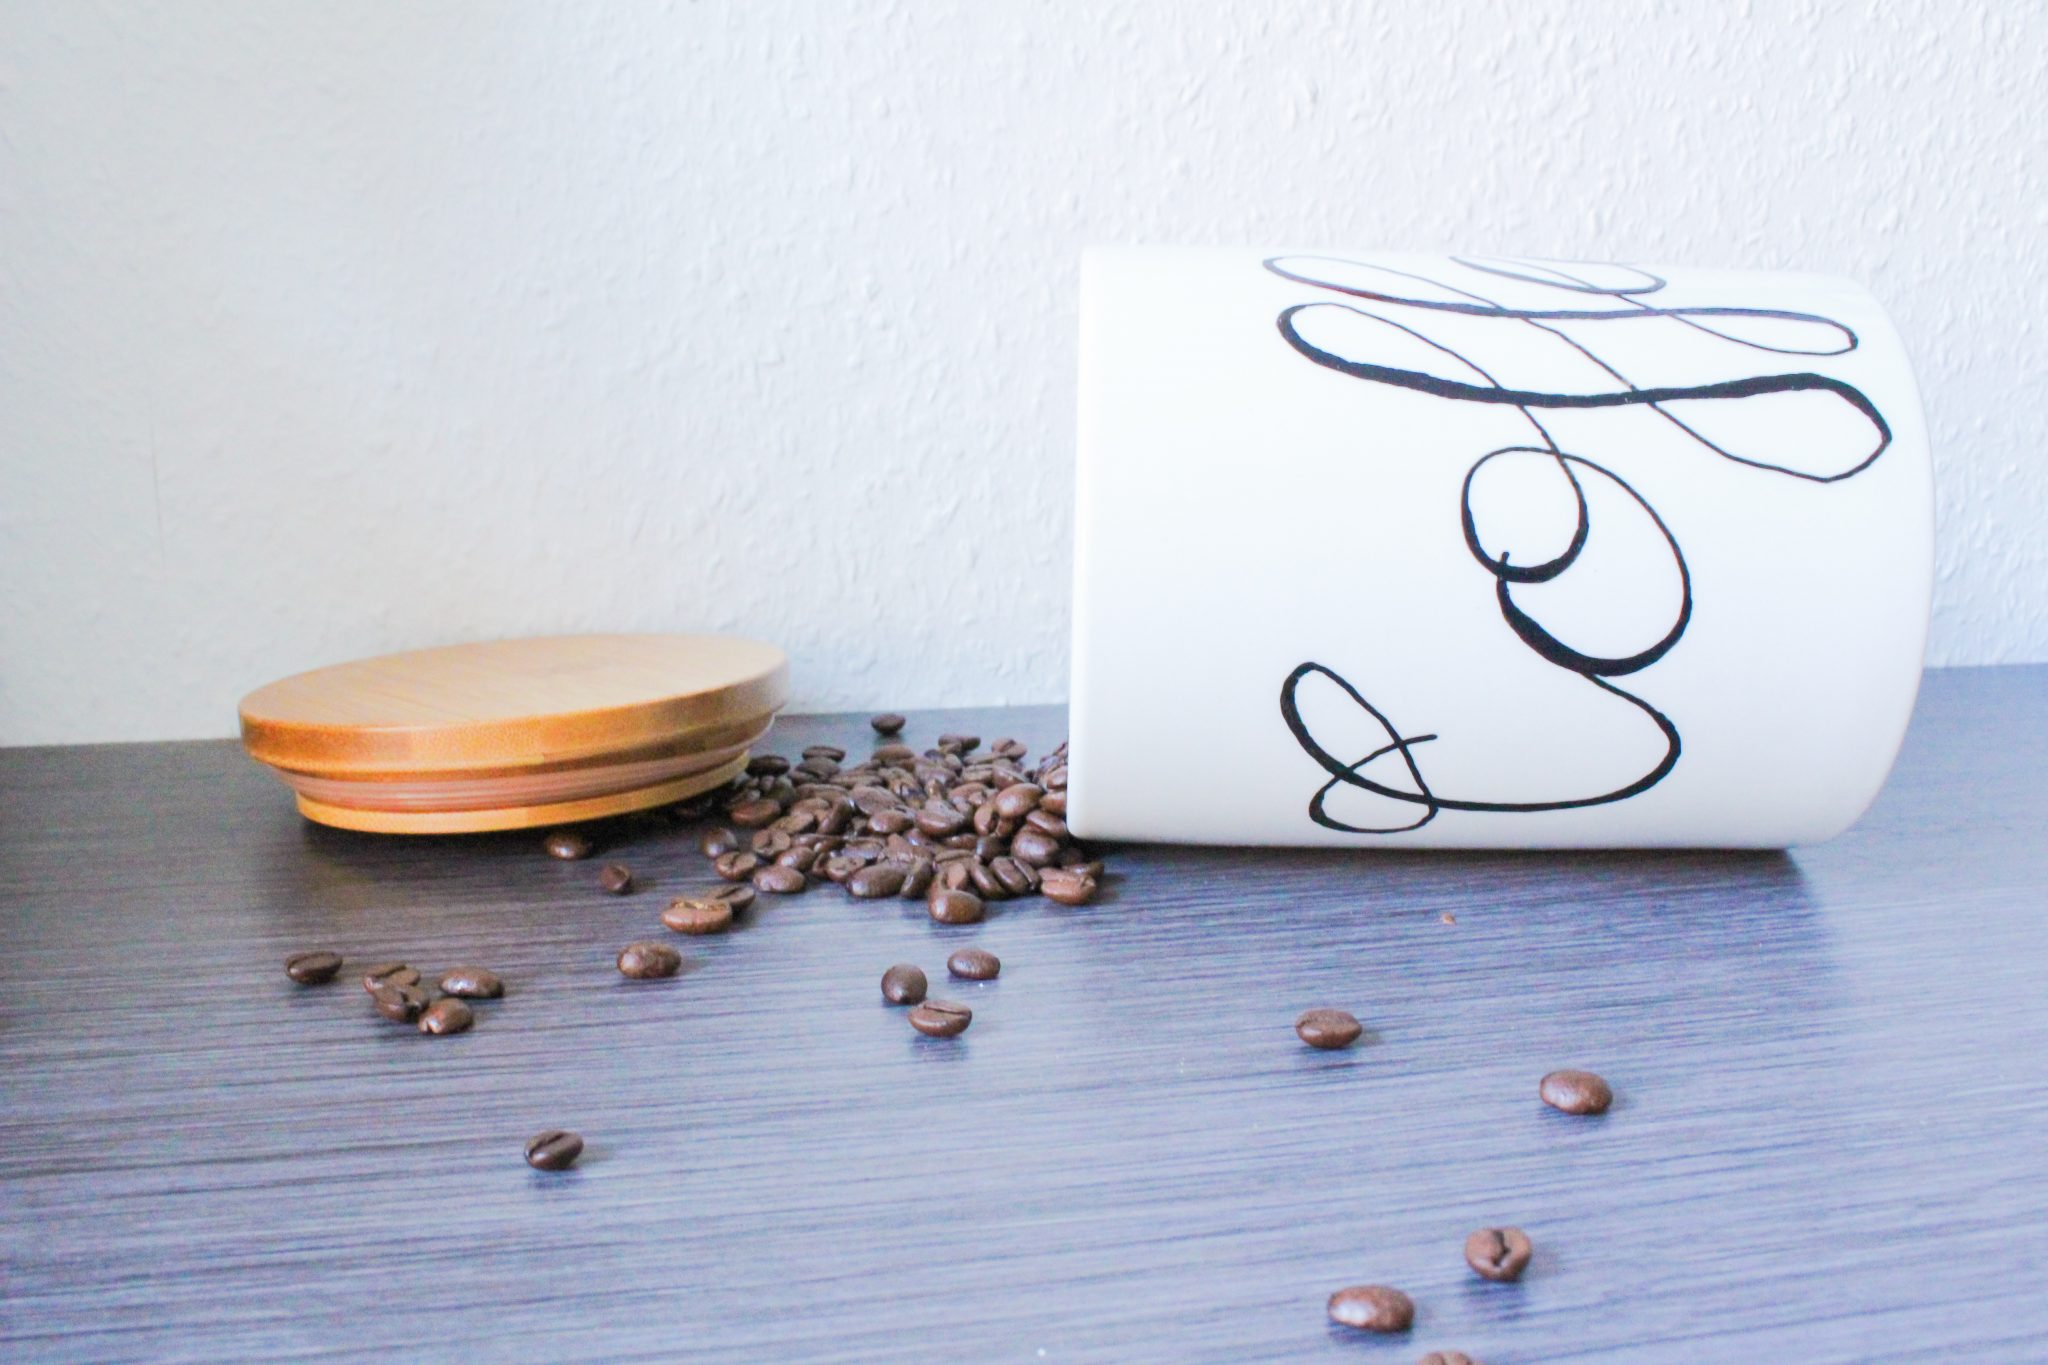 DIY Kaffeedose aus Porzellan mit Lettering